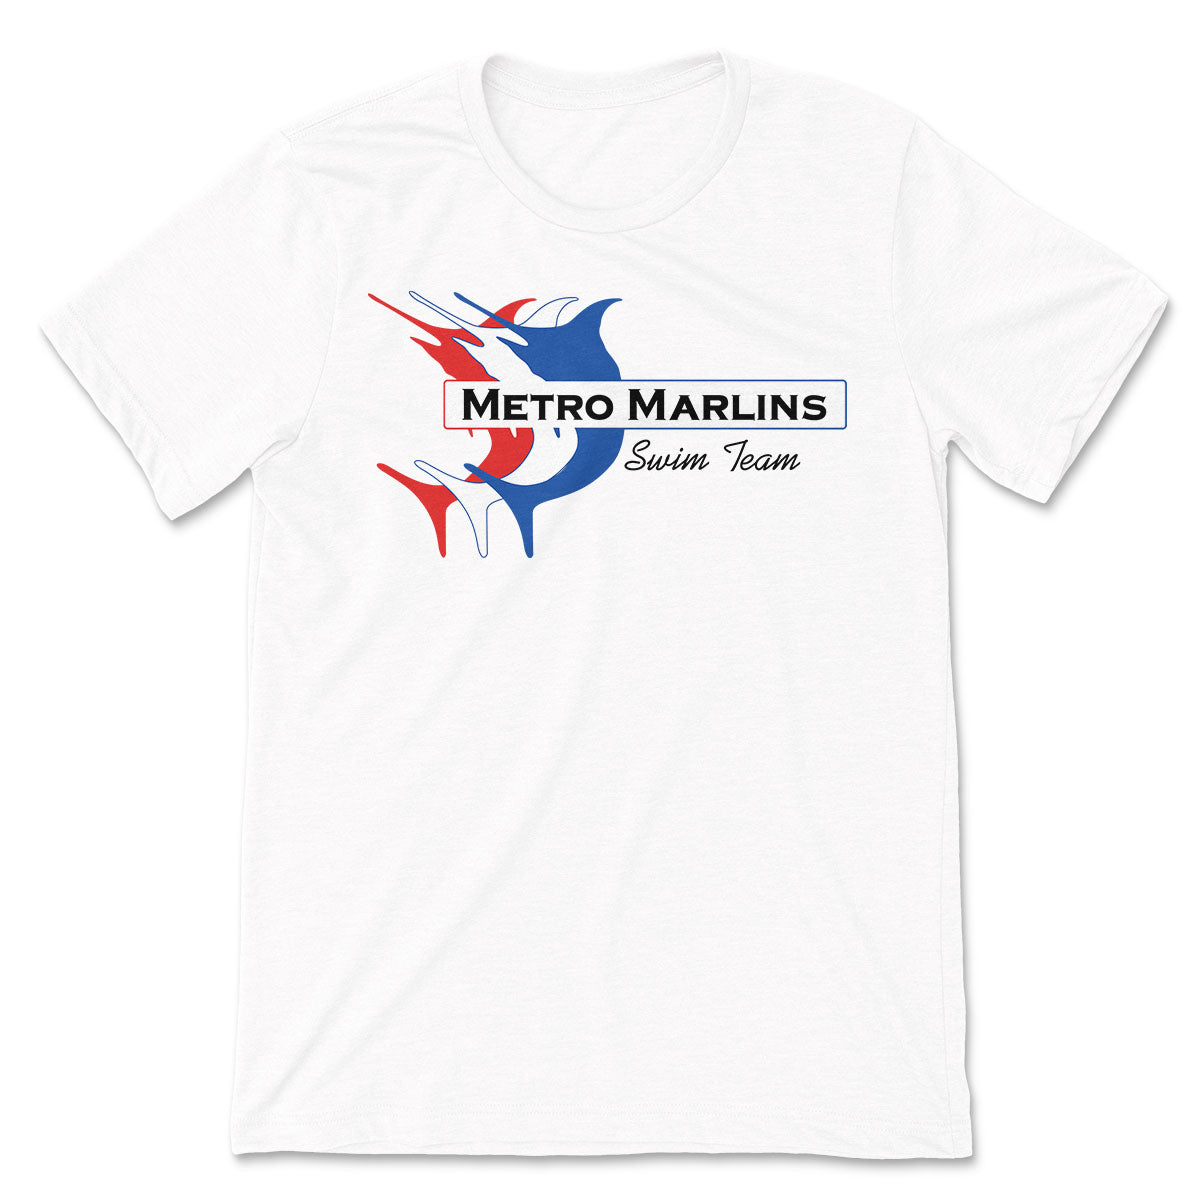 Metro Marlins // Youth Tee